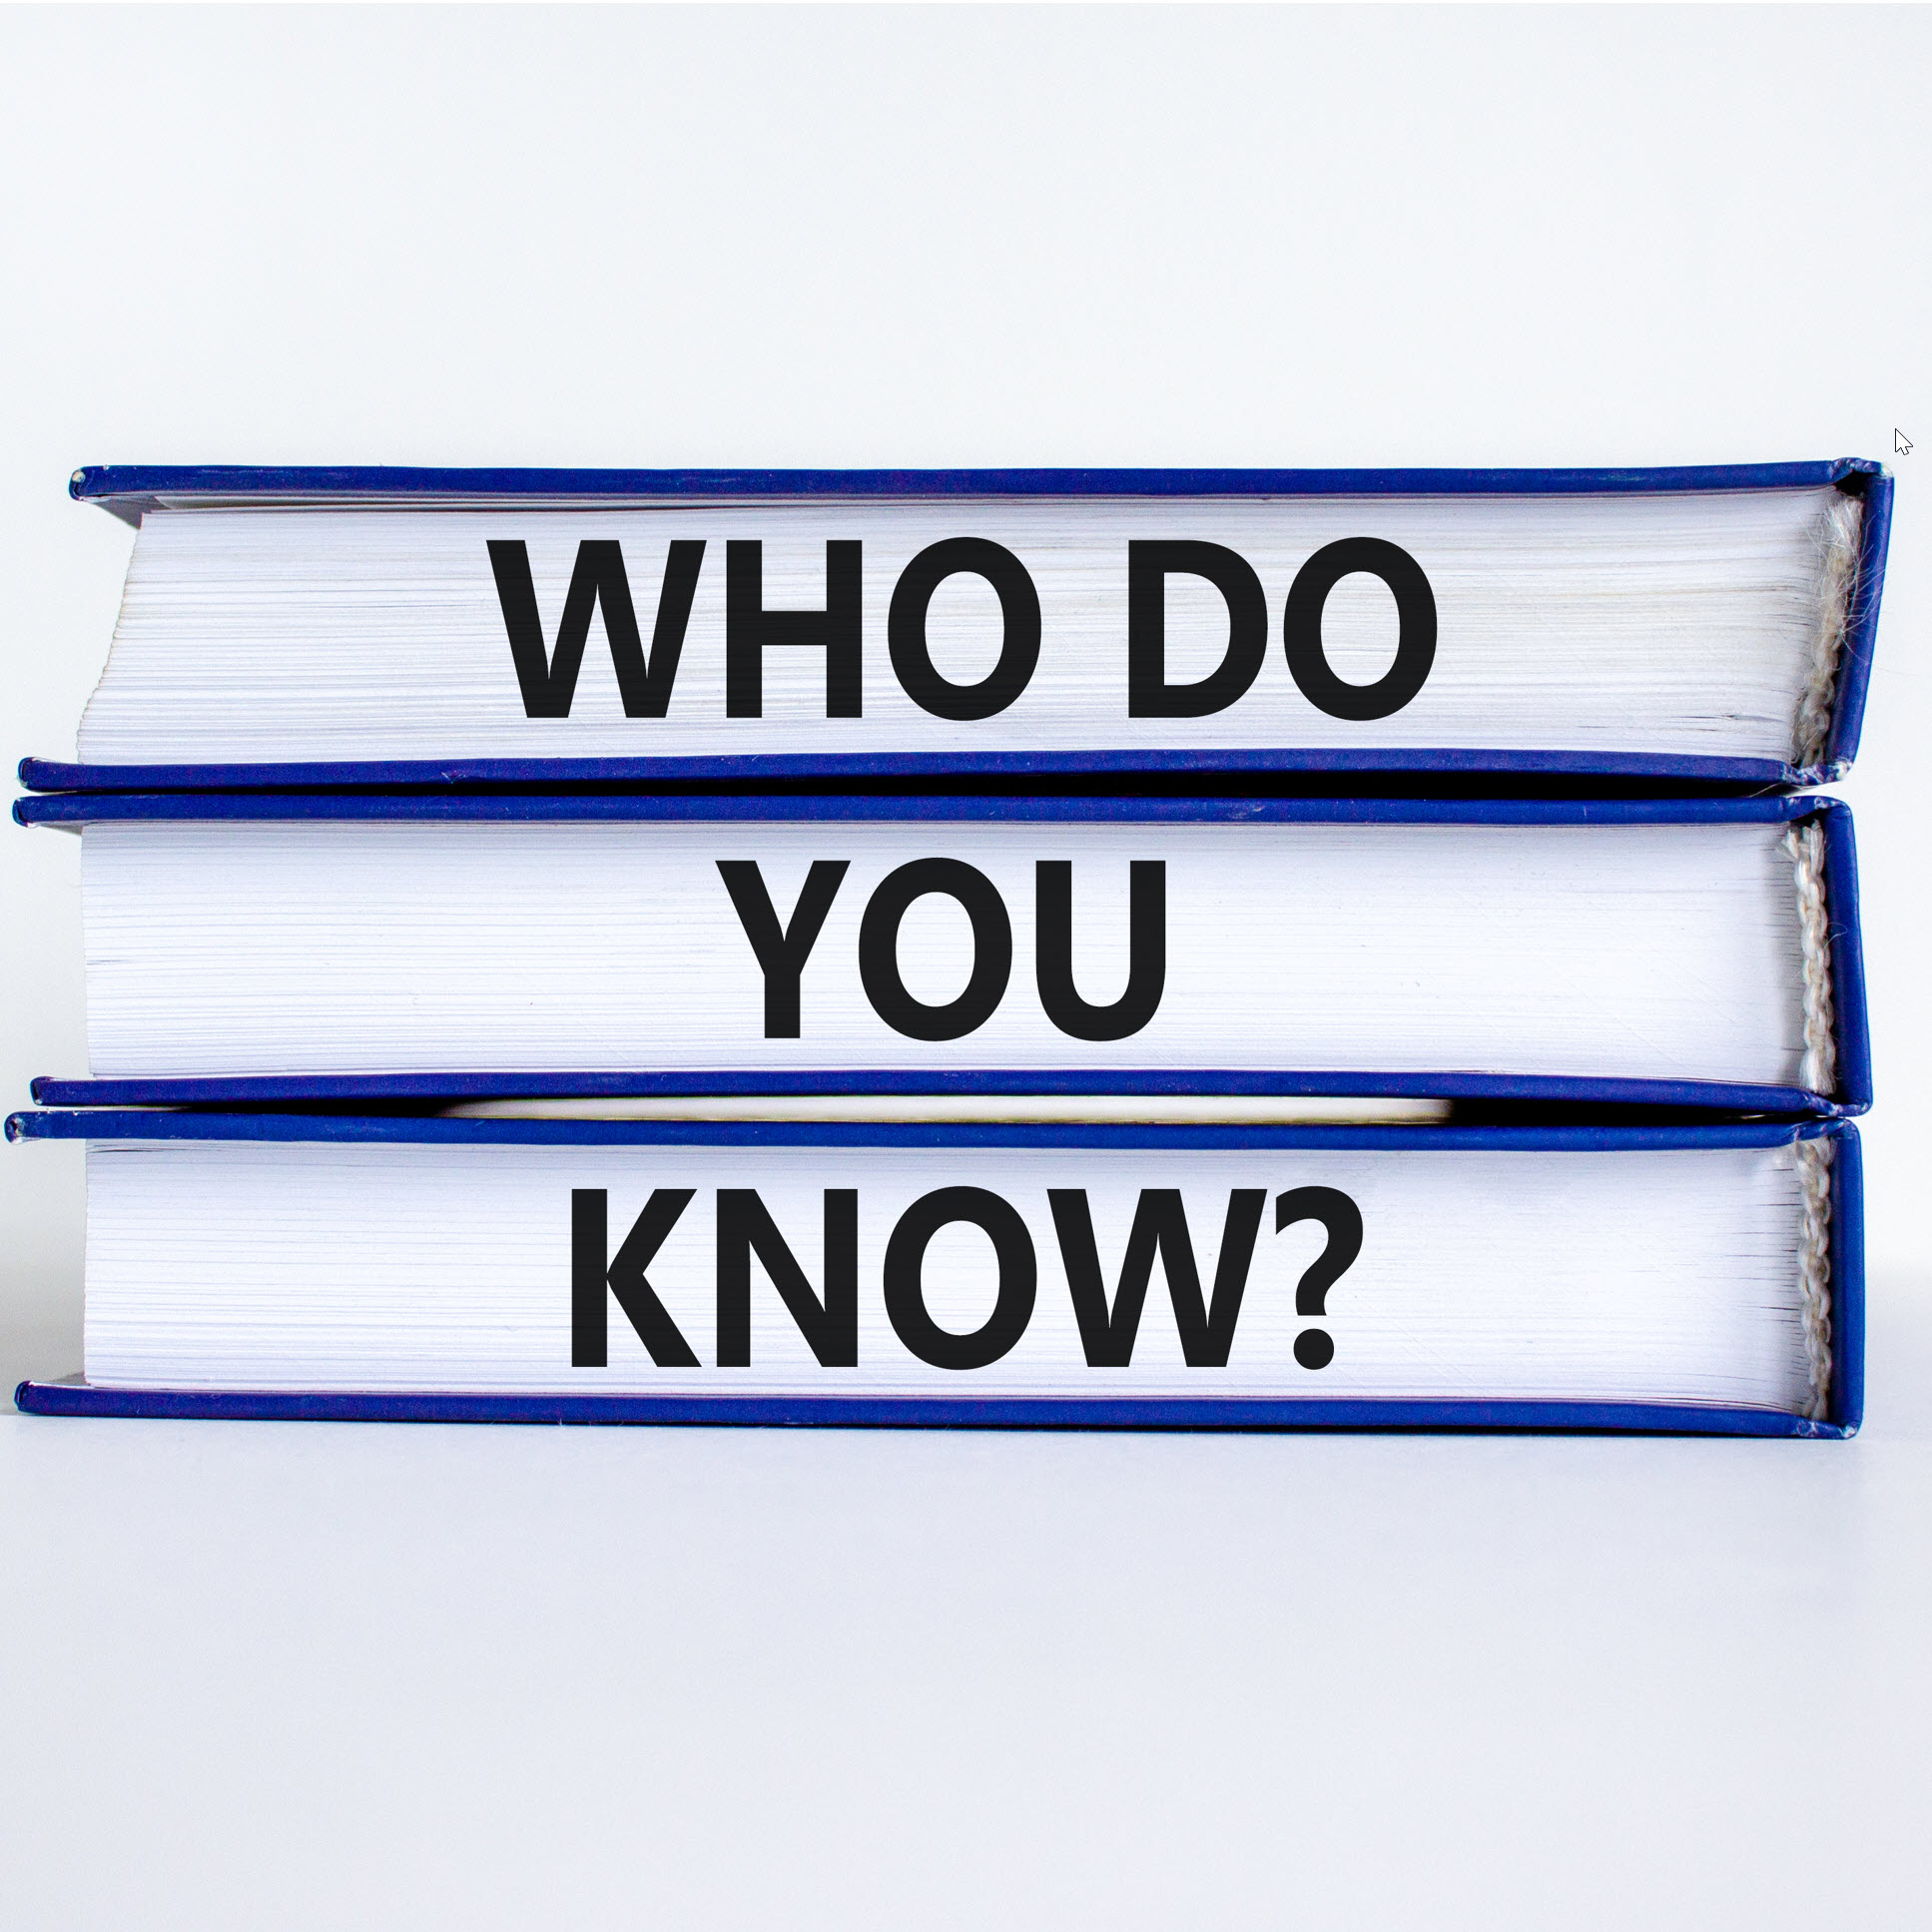 W03 – Who do you know?